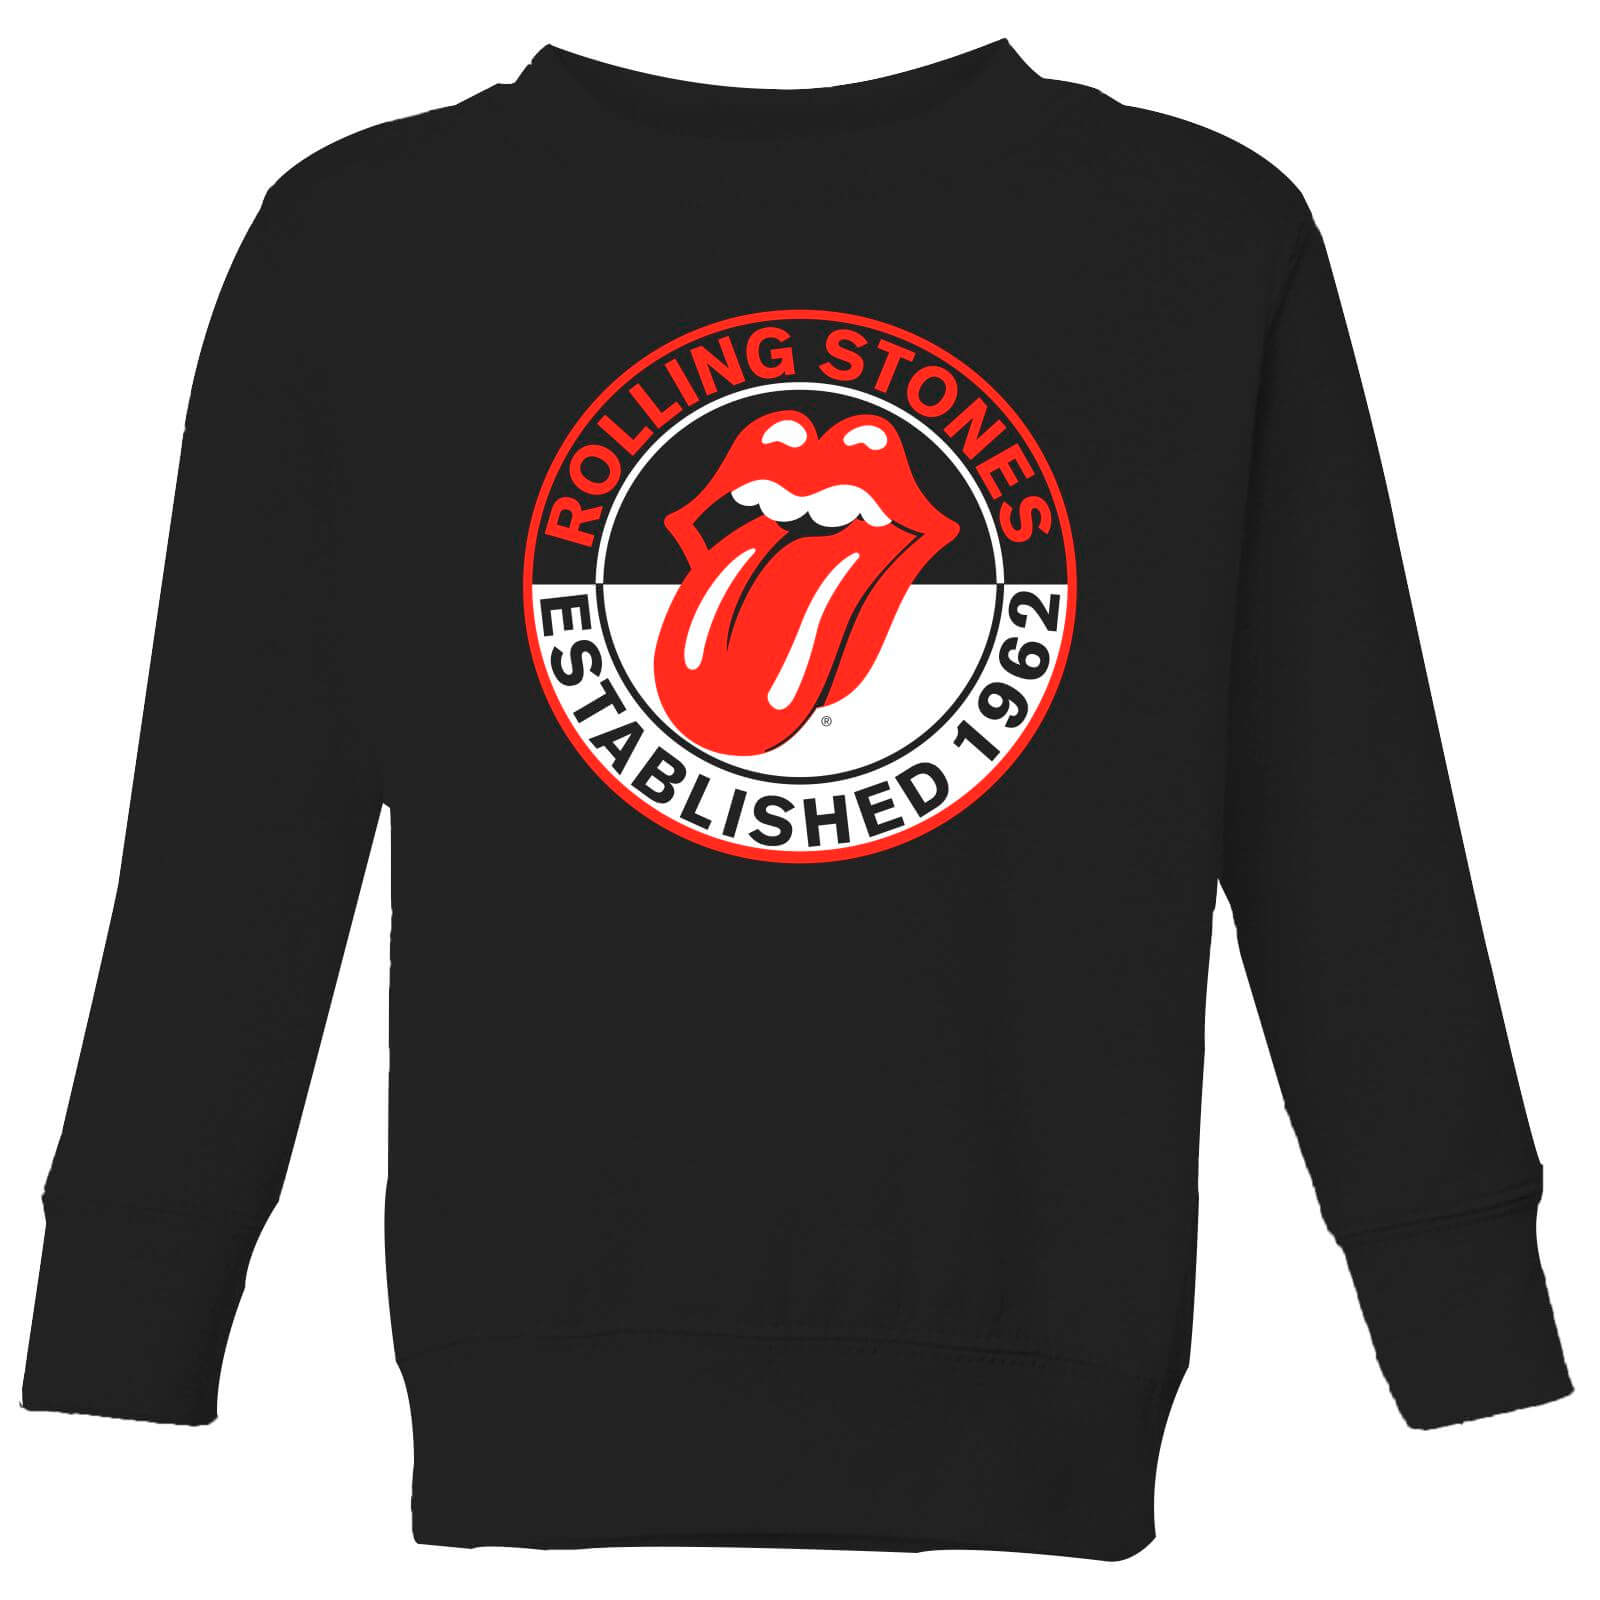 Rolling Stones Est 62 Kids' Sweatshirt - Black - 9-10 Years - Black